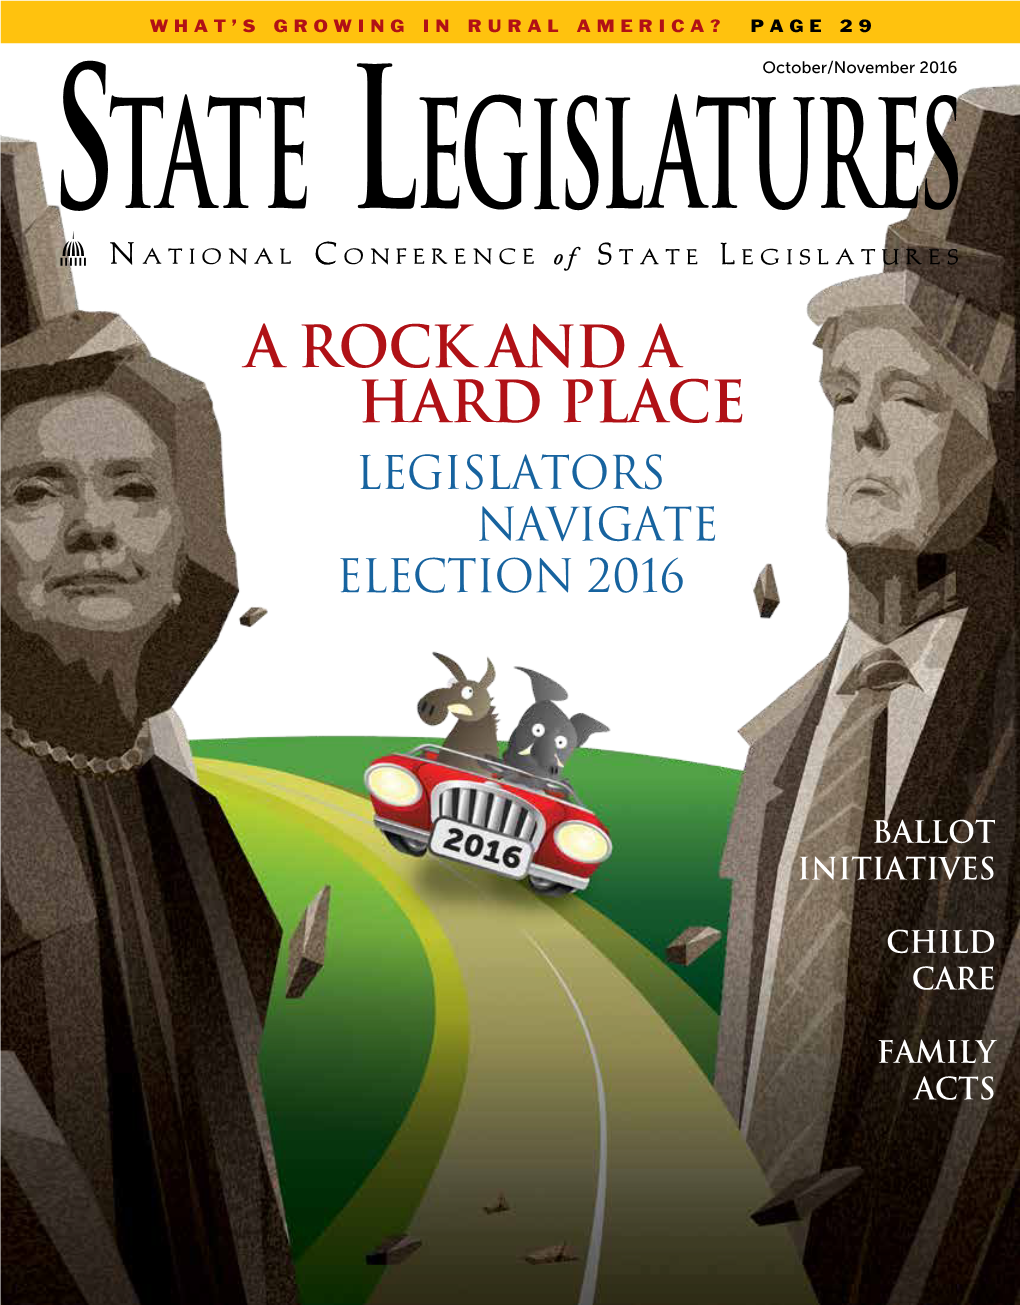 A Rock and a Hard Place Legislators Navigate Election 2016